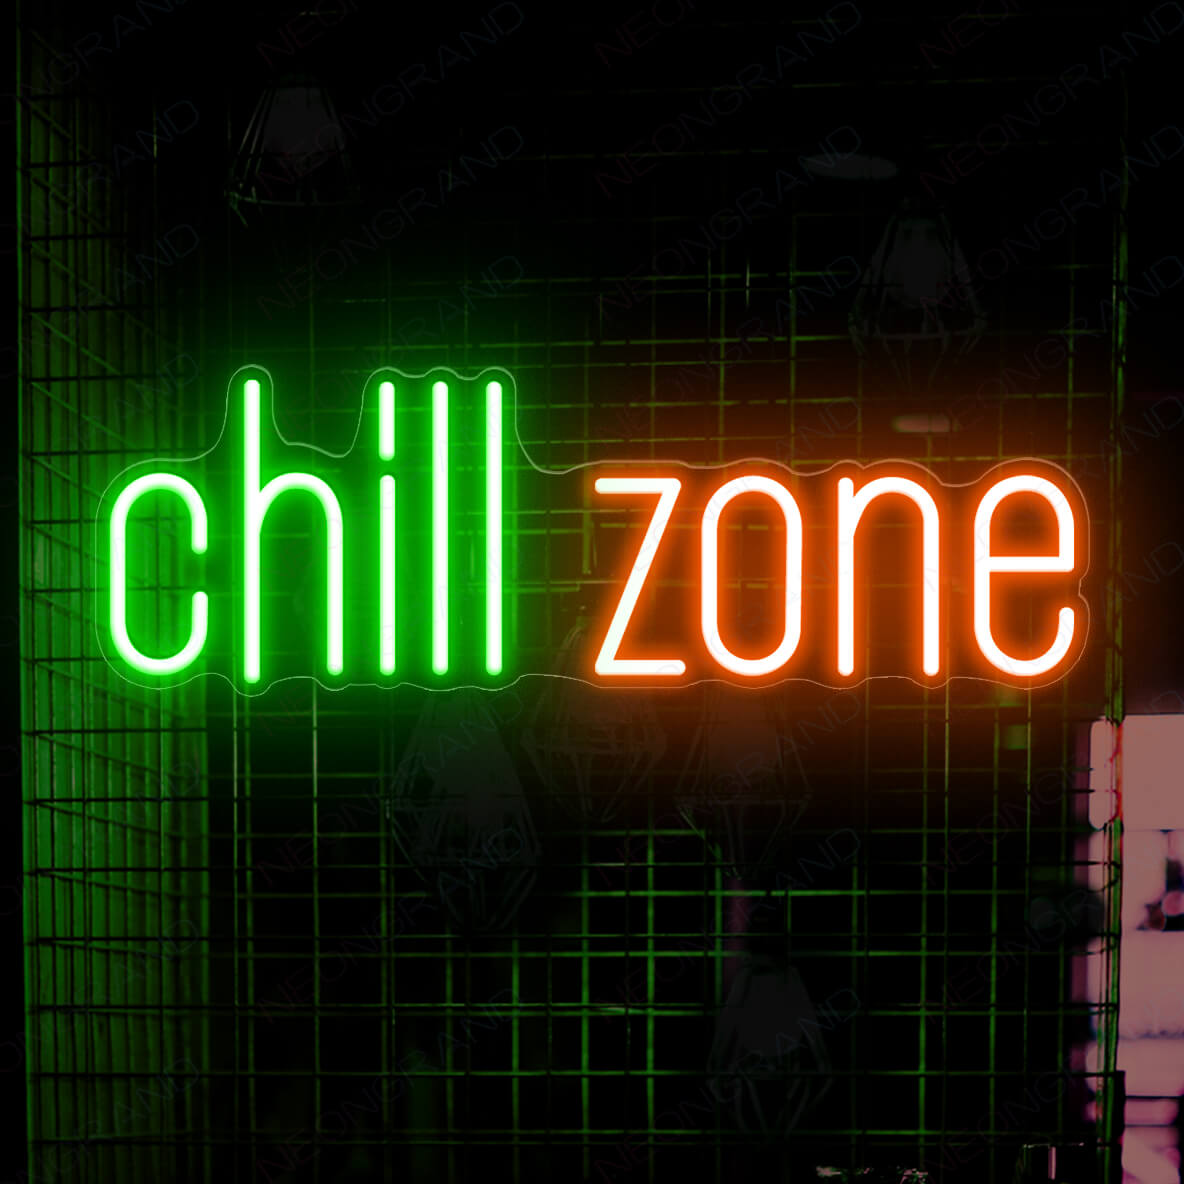 Chill Zone Neon Sign Led Chill Neon Light Sign orange